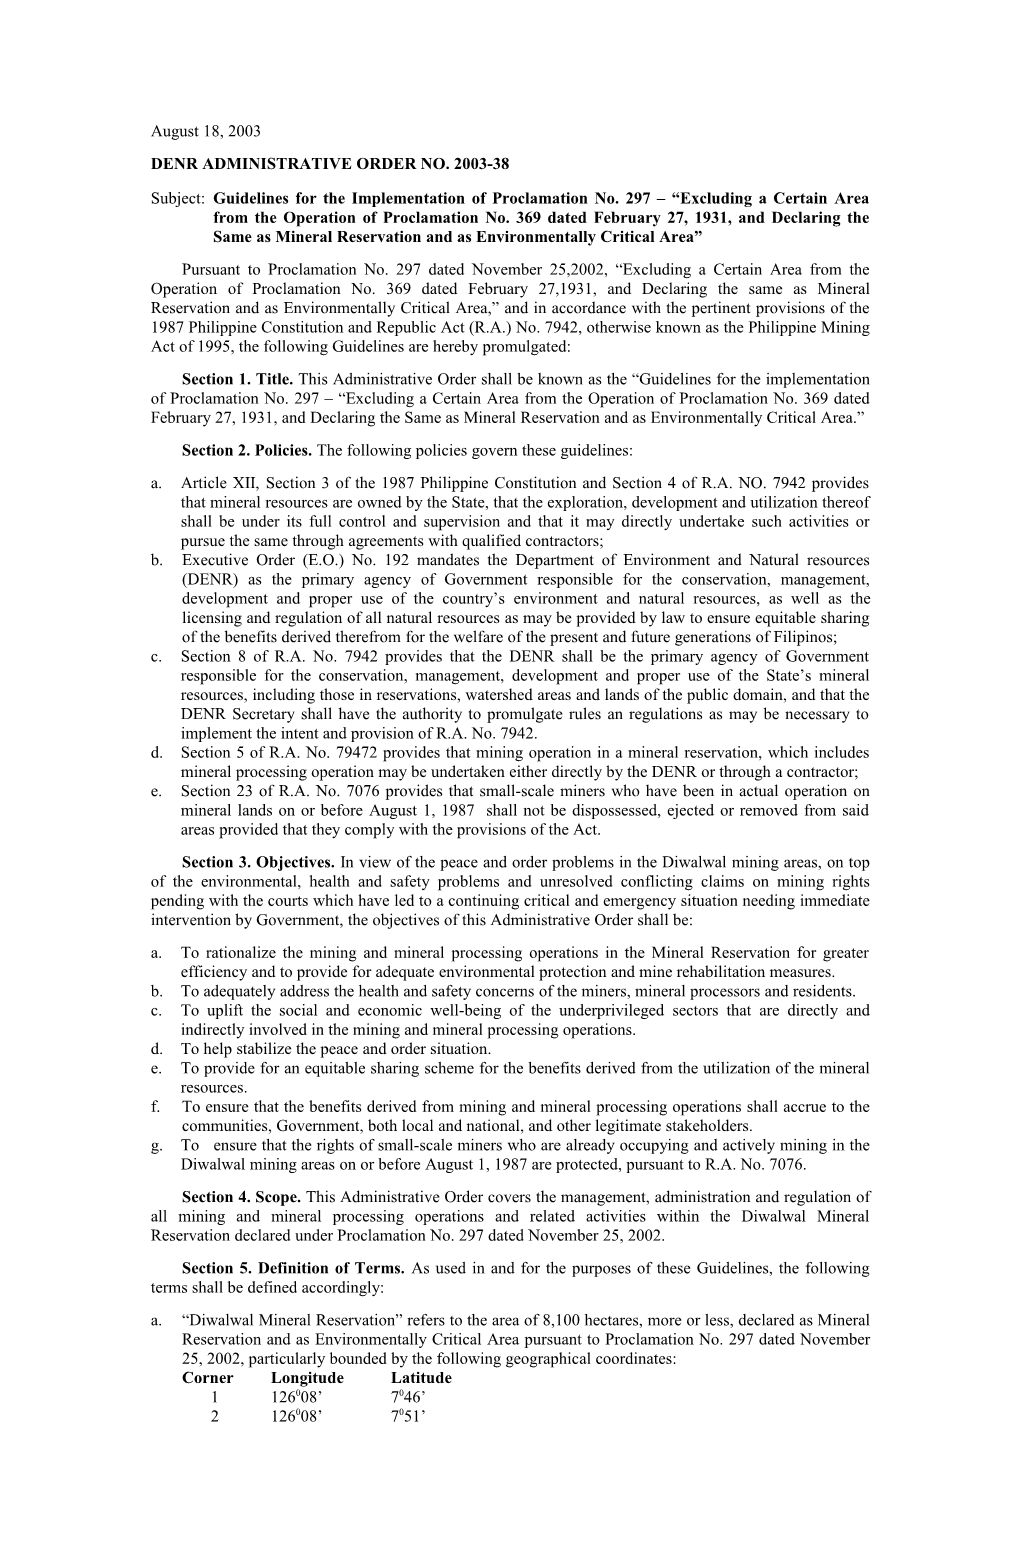 Denr Administrative Order No. 2003-38